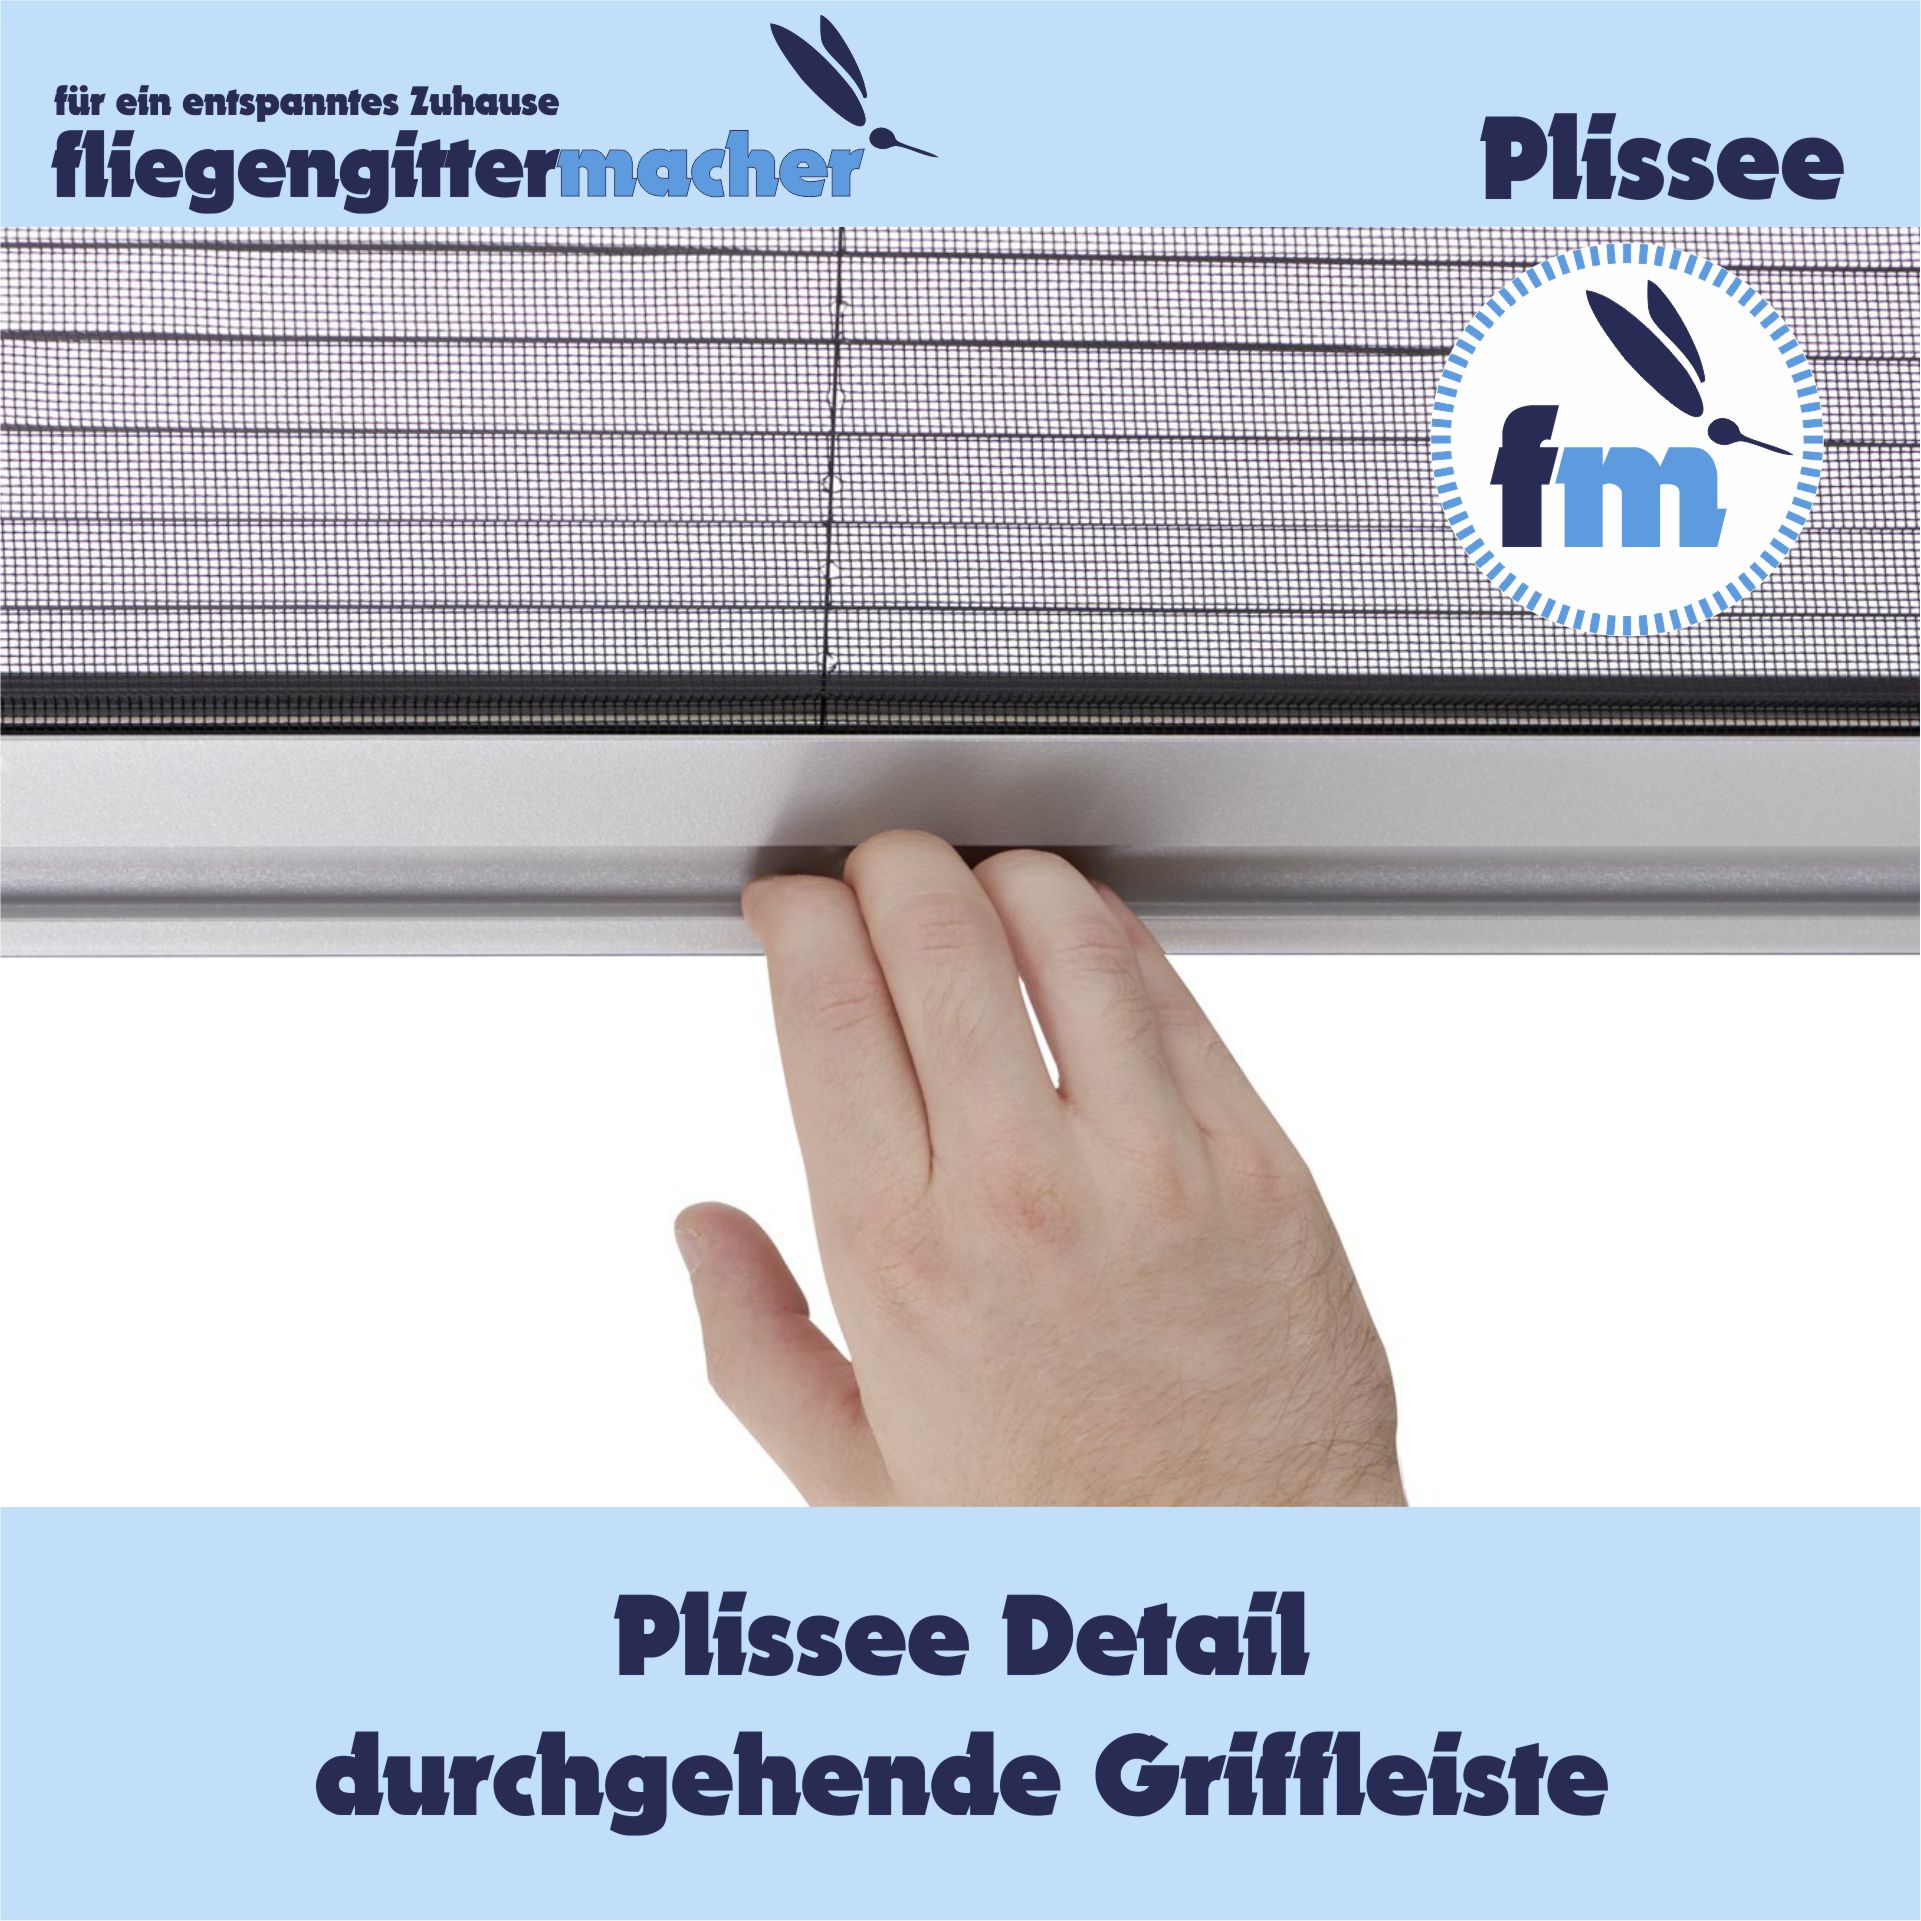 Insektenschutz Plissee Griffleiste | www.fliegengittermacher.de | Fliegengitter nach Maß